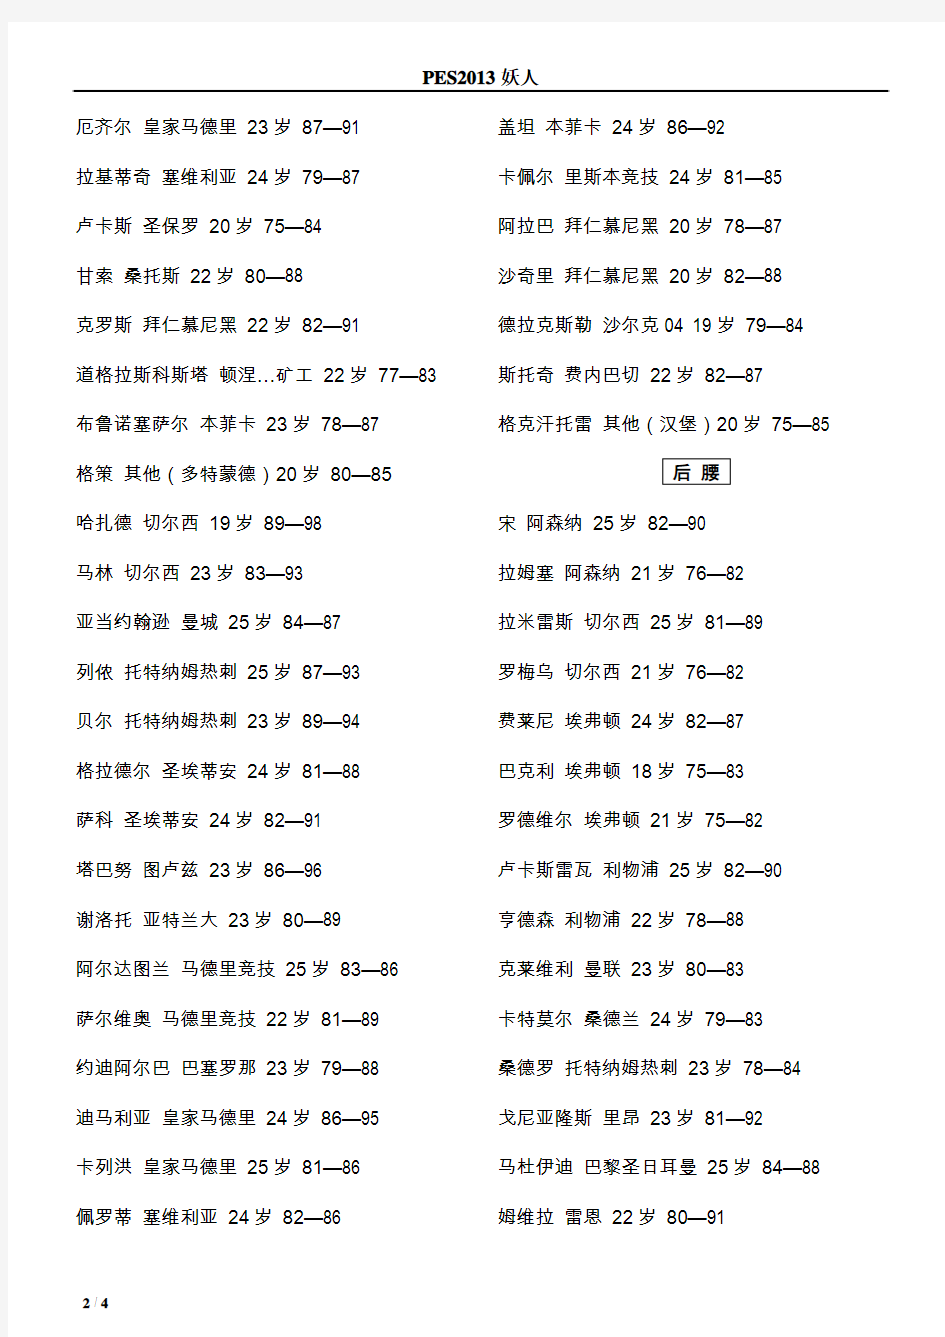 PES2013妖人名单[全,打印版]